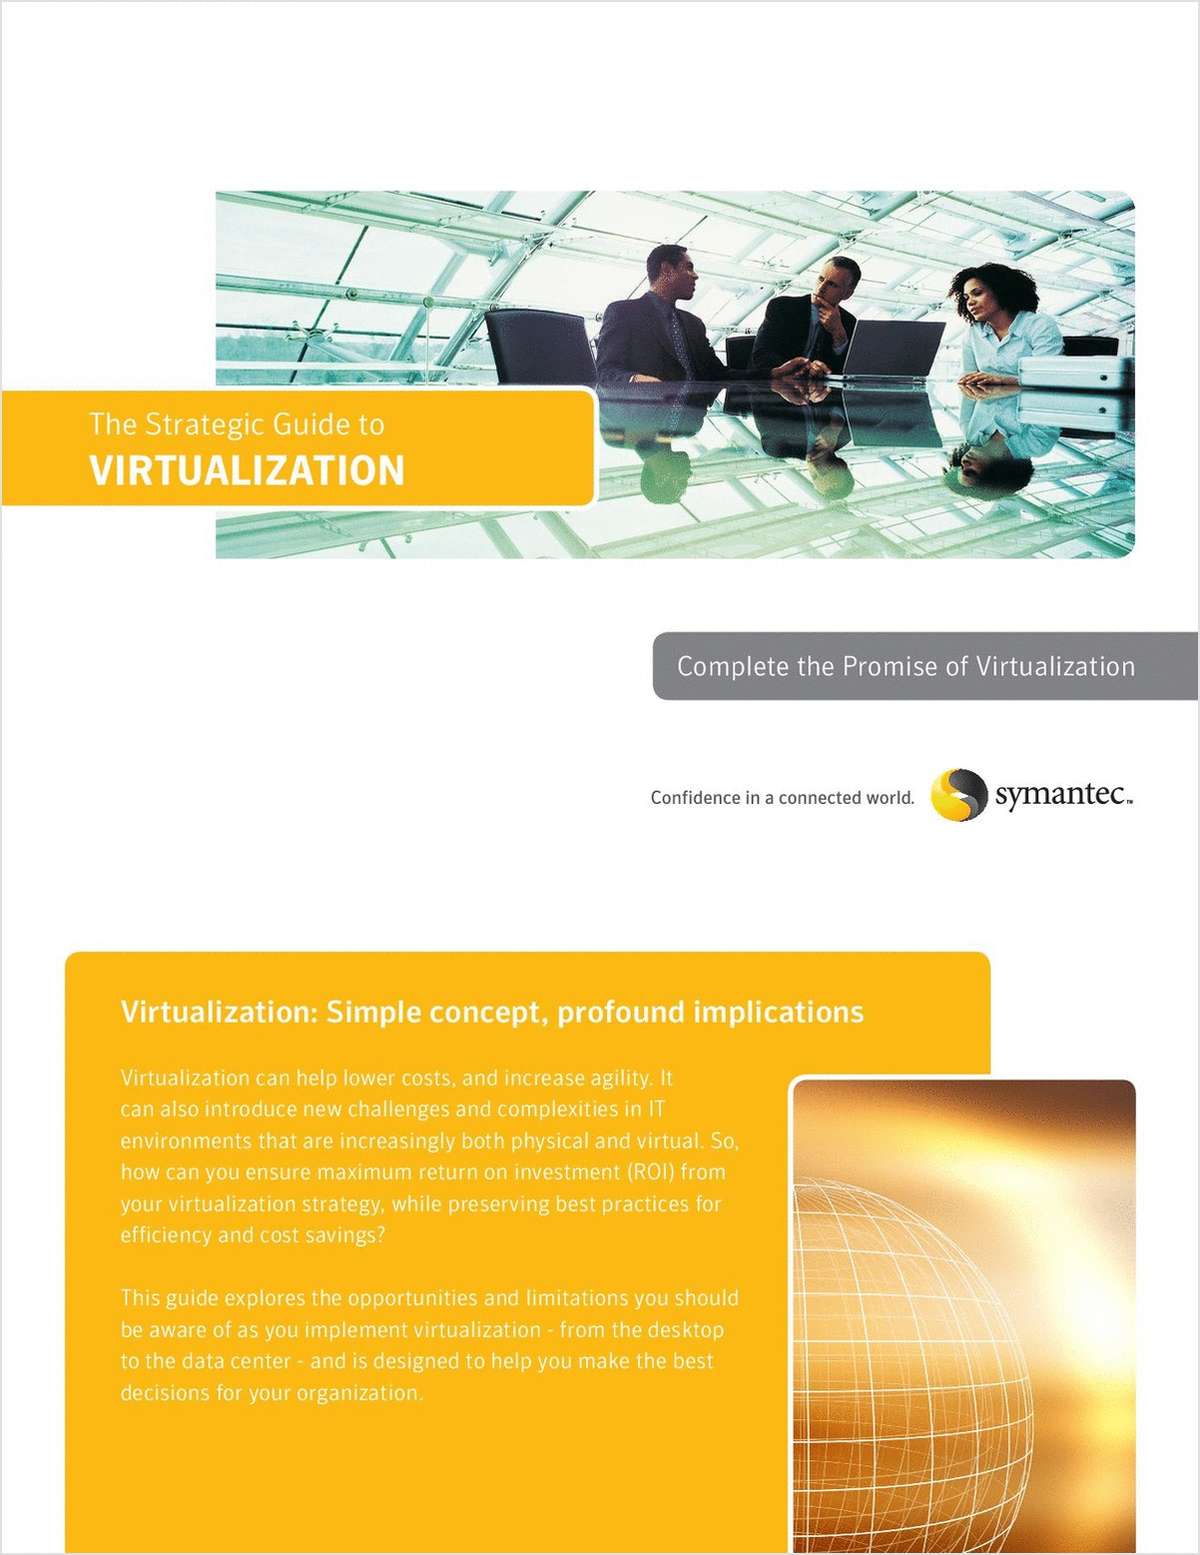 The Strategic Guide to Virtualization